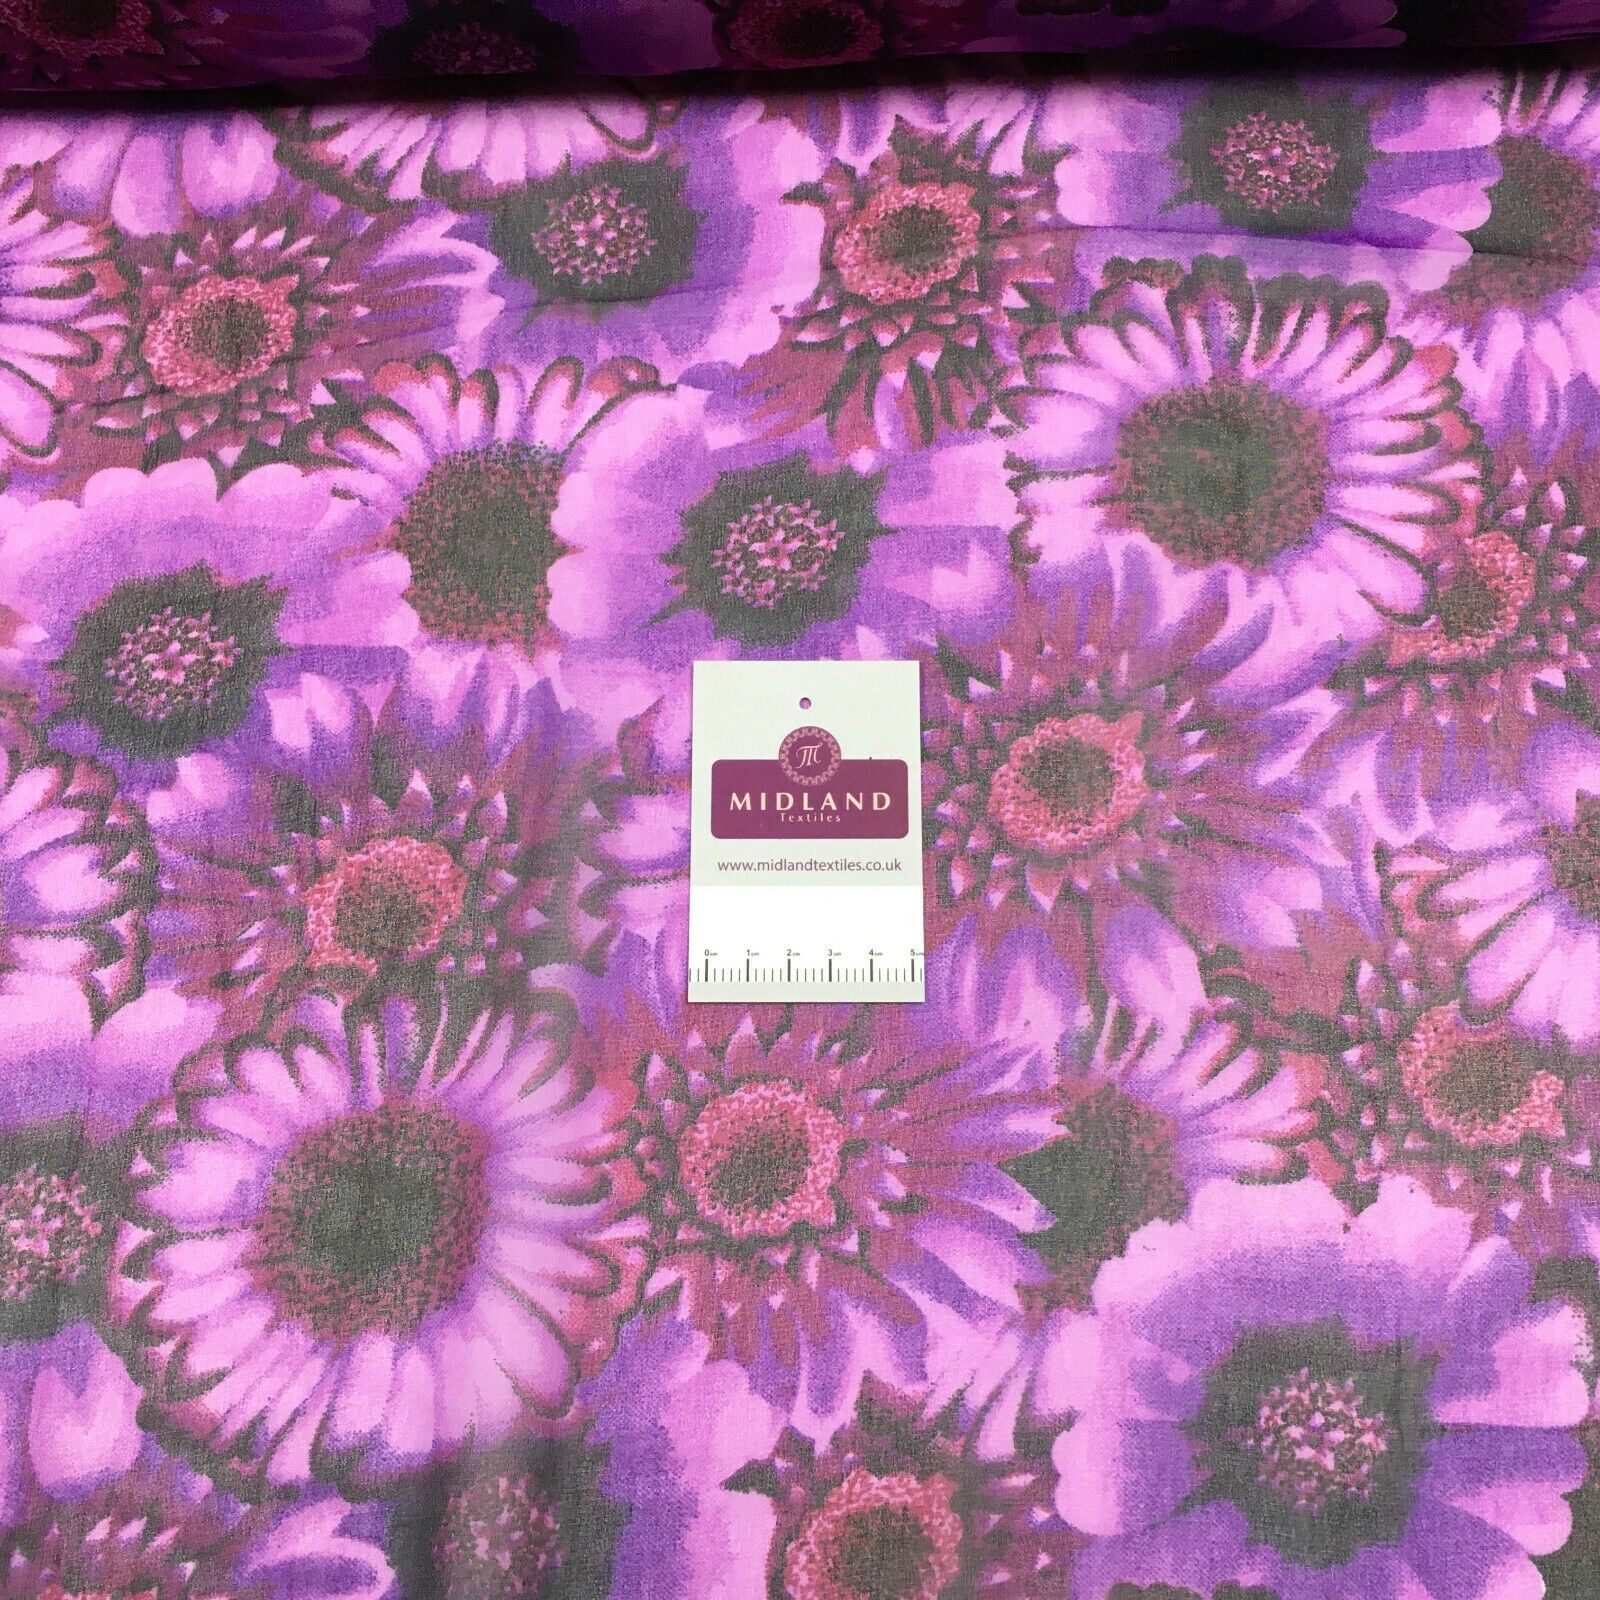 Floral printed Crepe chiffon Fabric M1426 Mtex